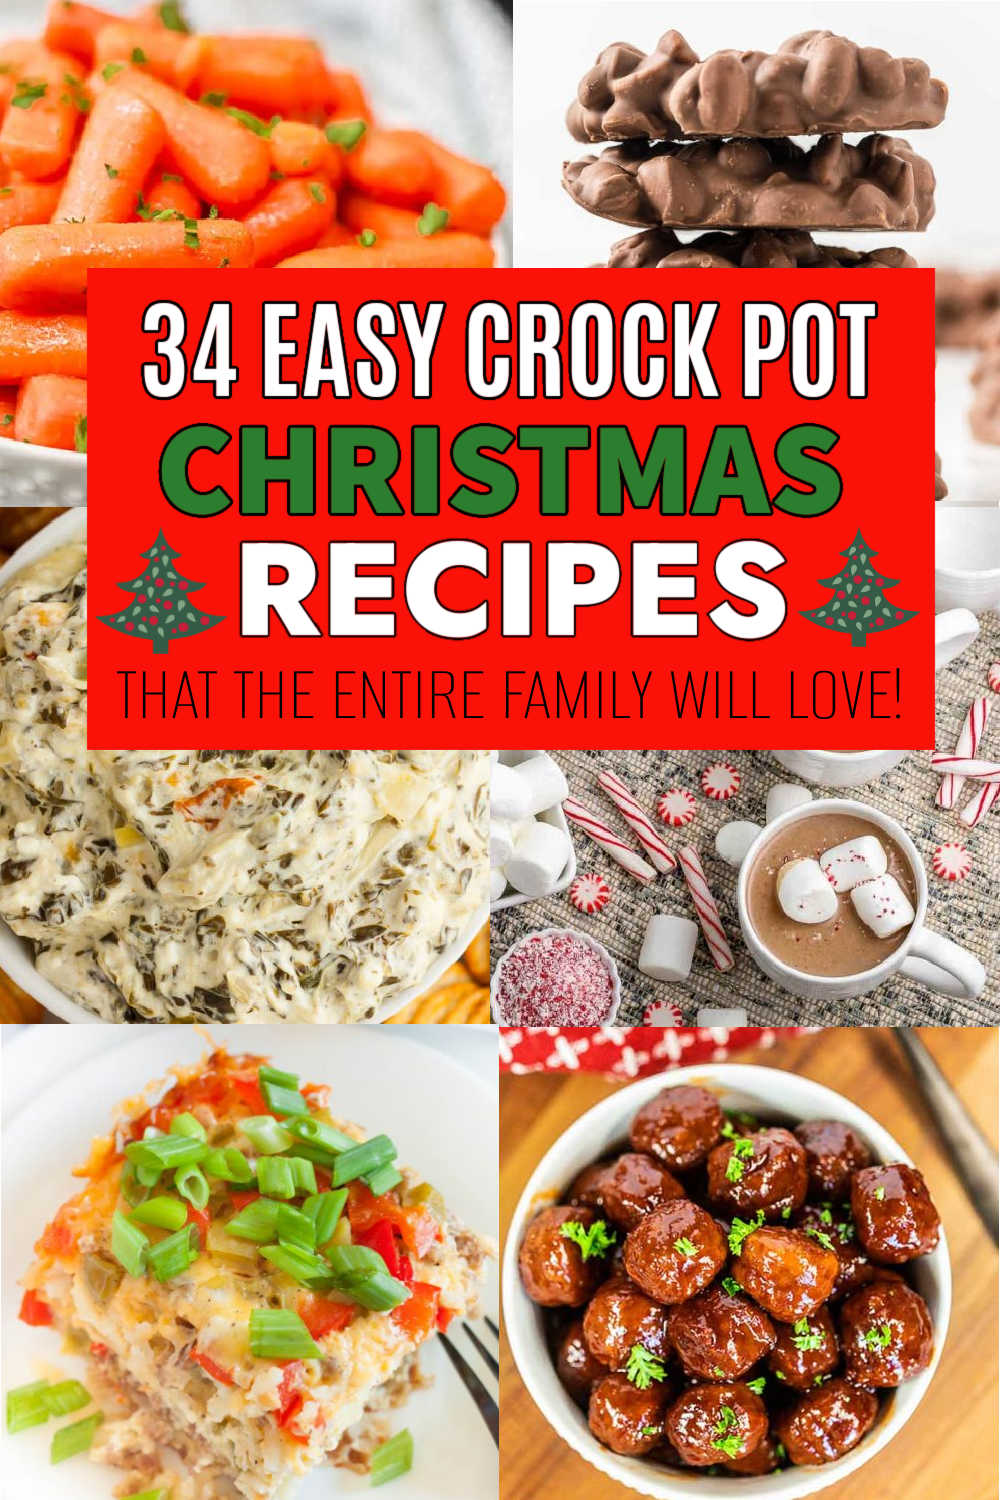 https://www.eatingonadime.com/wp-content/uploads/2022/08/Crockpot-Christmas-Recipes-1a.jpg